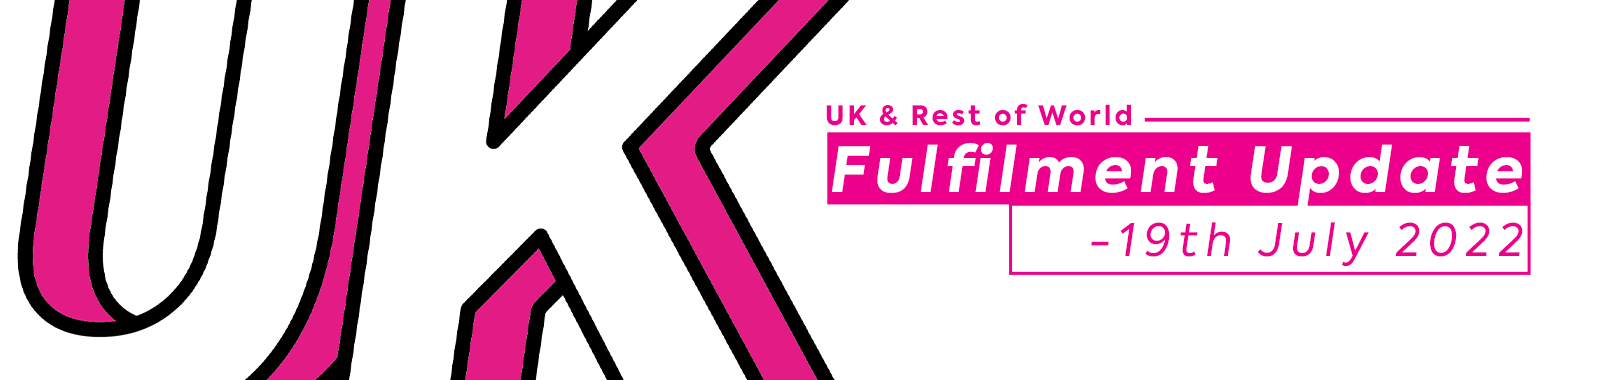 UK & ROW Fulfilment Update - 19th July